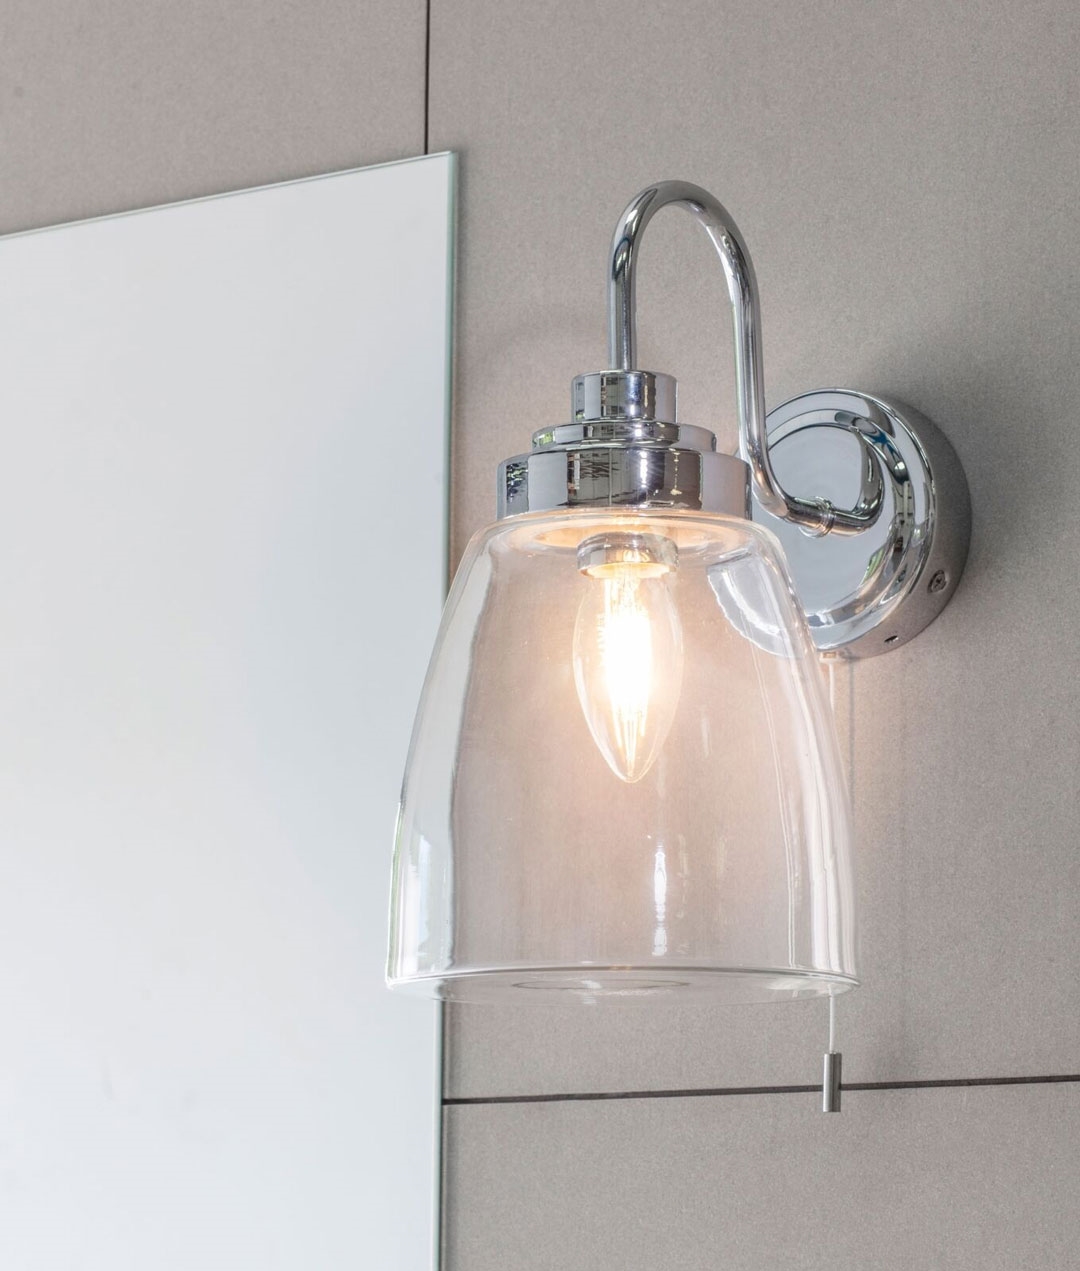 Clear Glass Chrome Swan Neck Wall Light Ip44 Rated - Bathroom Wall Lights Chrome